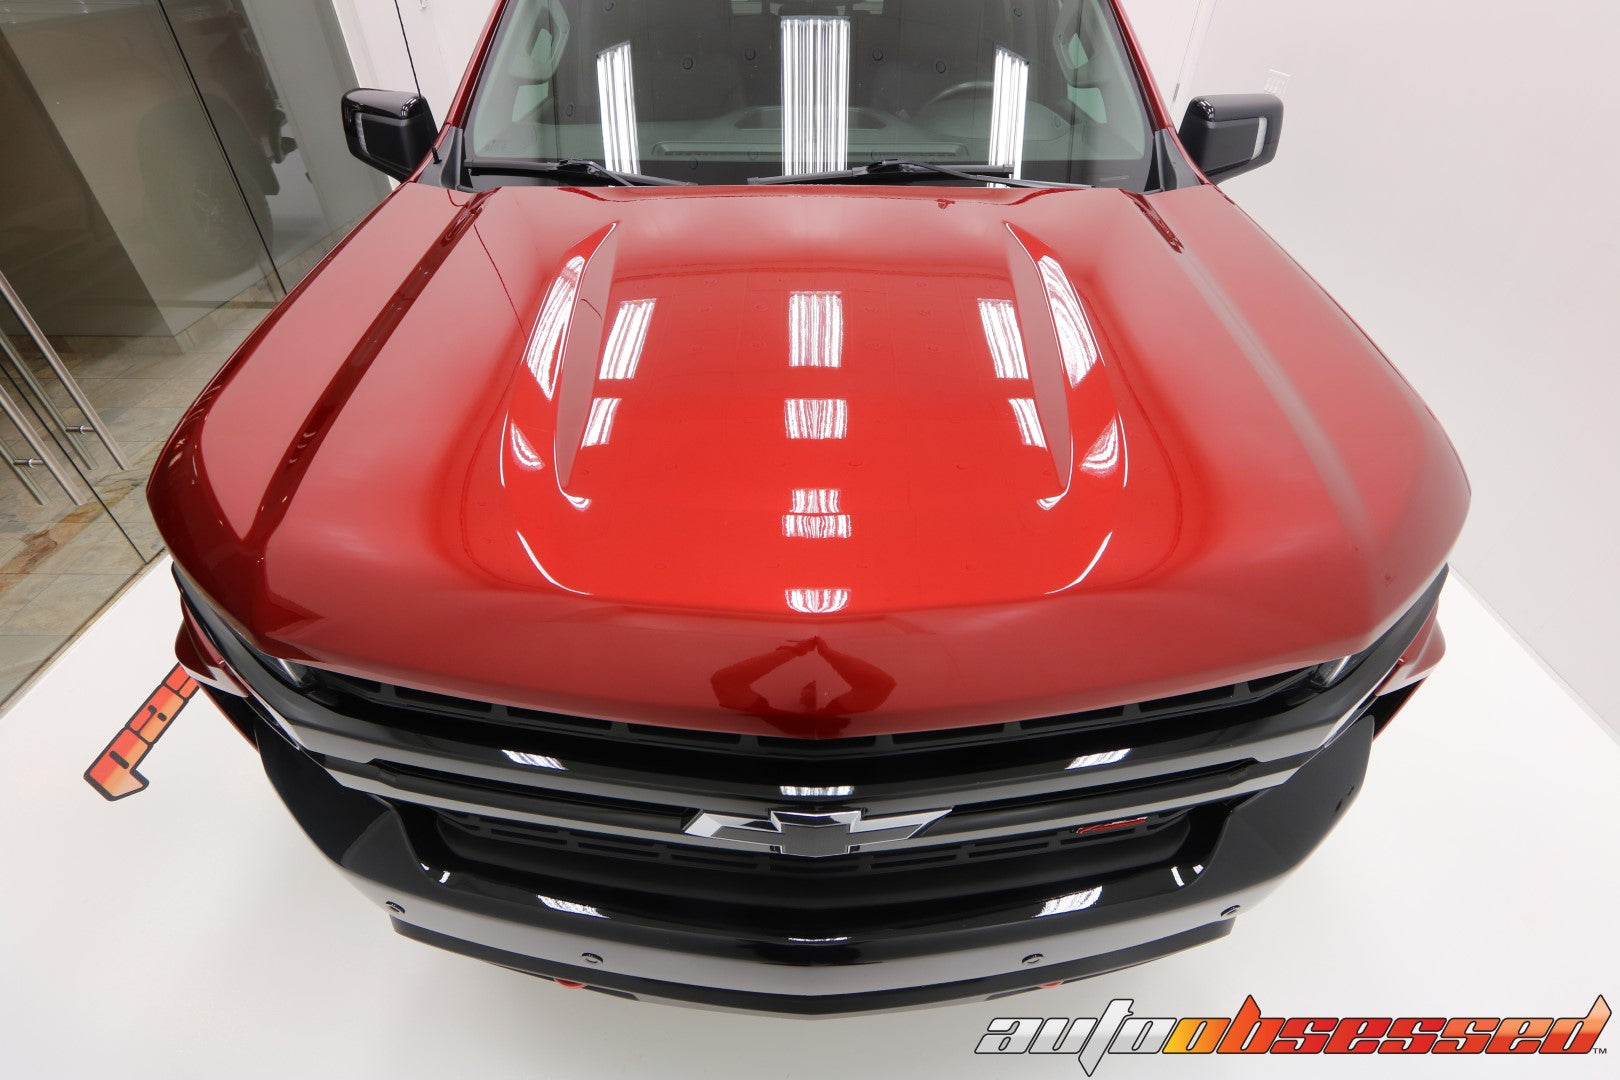 2021 Chevrolet Silverado Car Detailing - Auto Obsessed